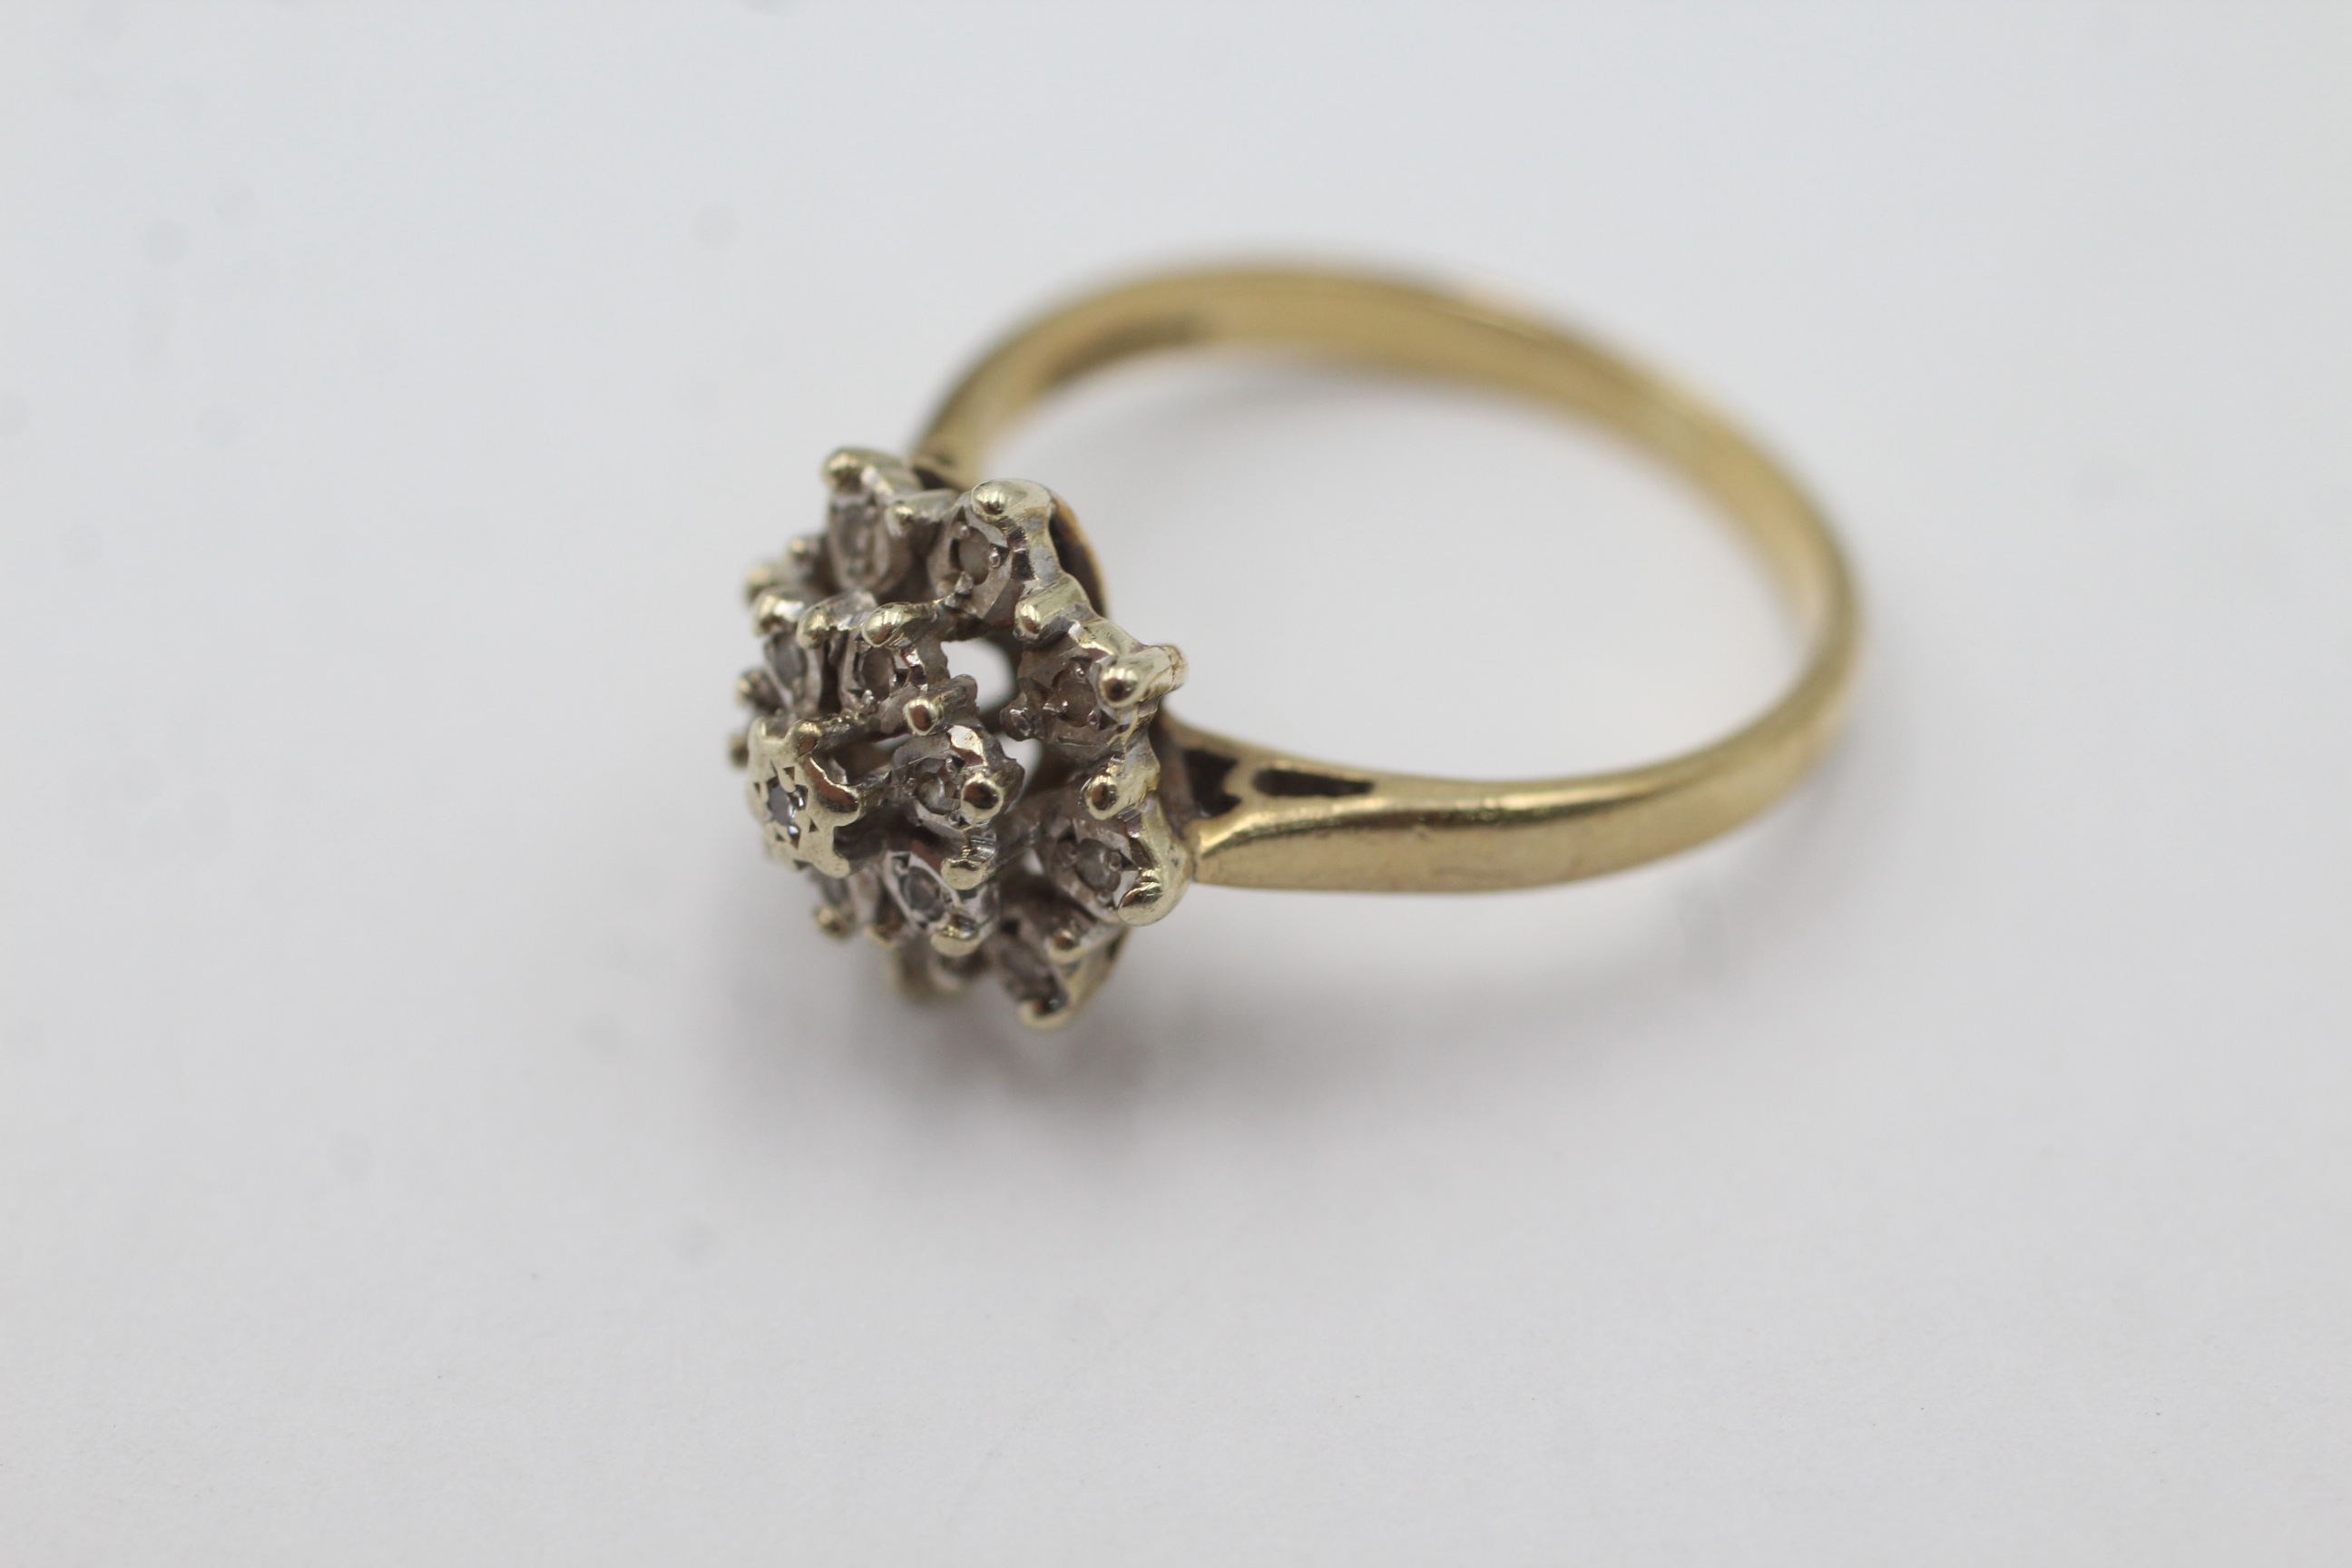 9ct gold diamond dress ring (3g) - Image 2 of 4